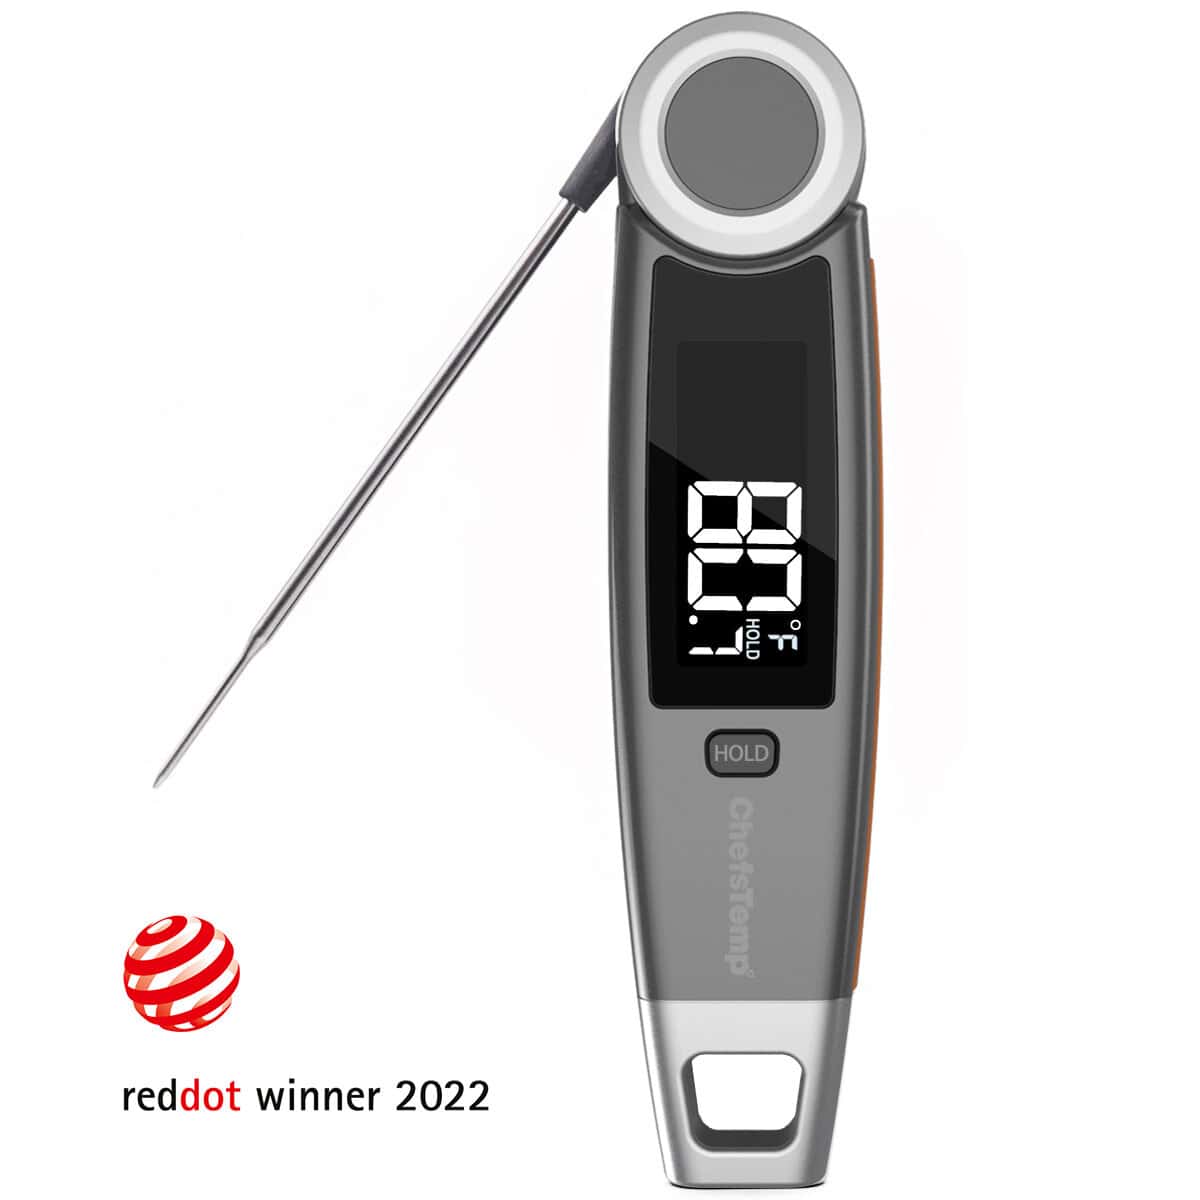 ChefsTemp: The Next Generation Wireless Meat Thermometer by ChefsTemp —  Kickstarter